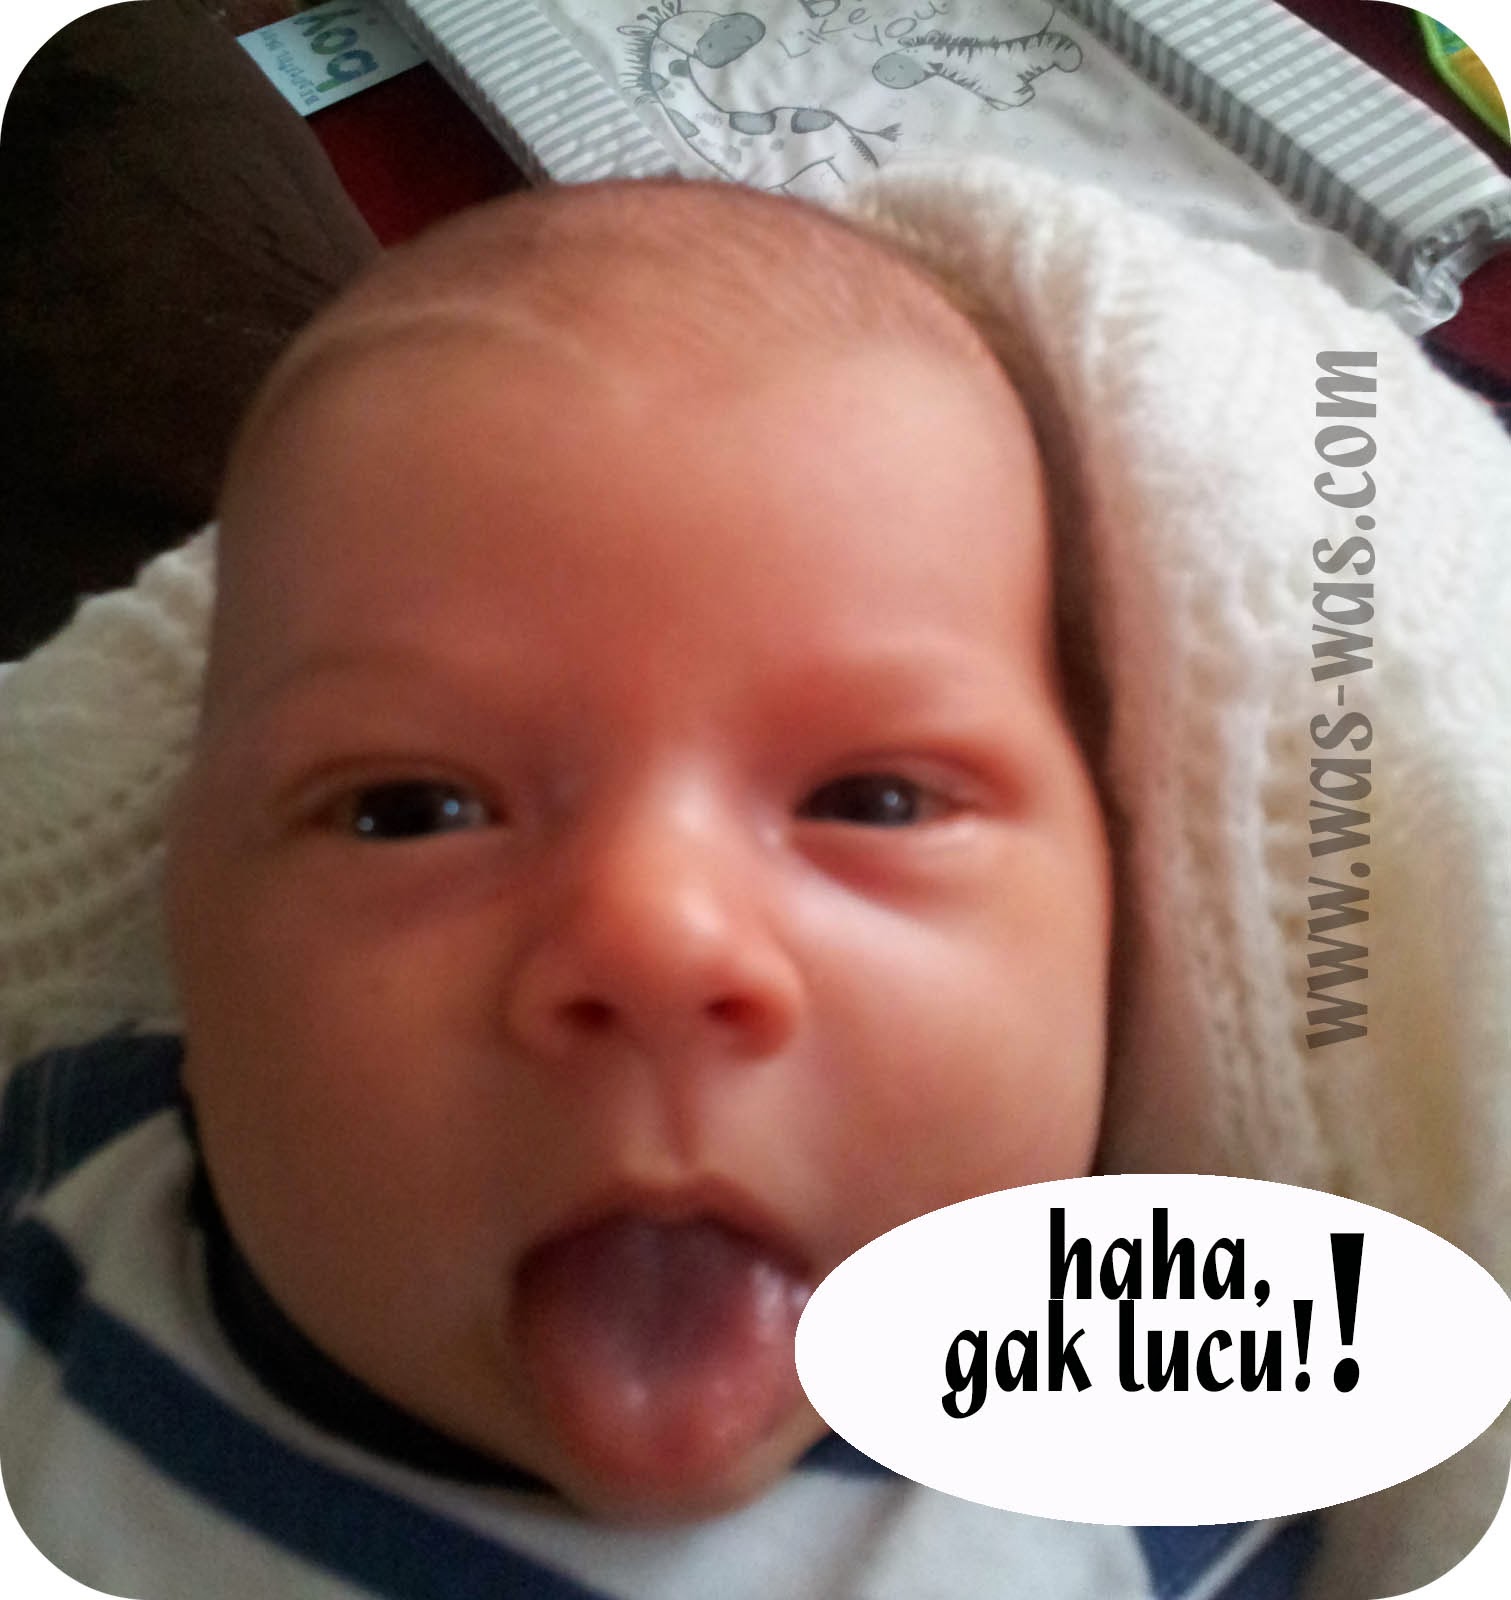 Gambar Meme Lucu Anak Bayi Keren Dan Terbaru DP BBM Lucu Kocak